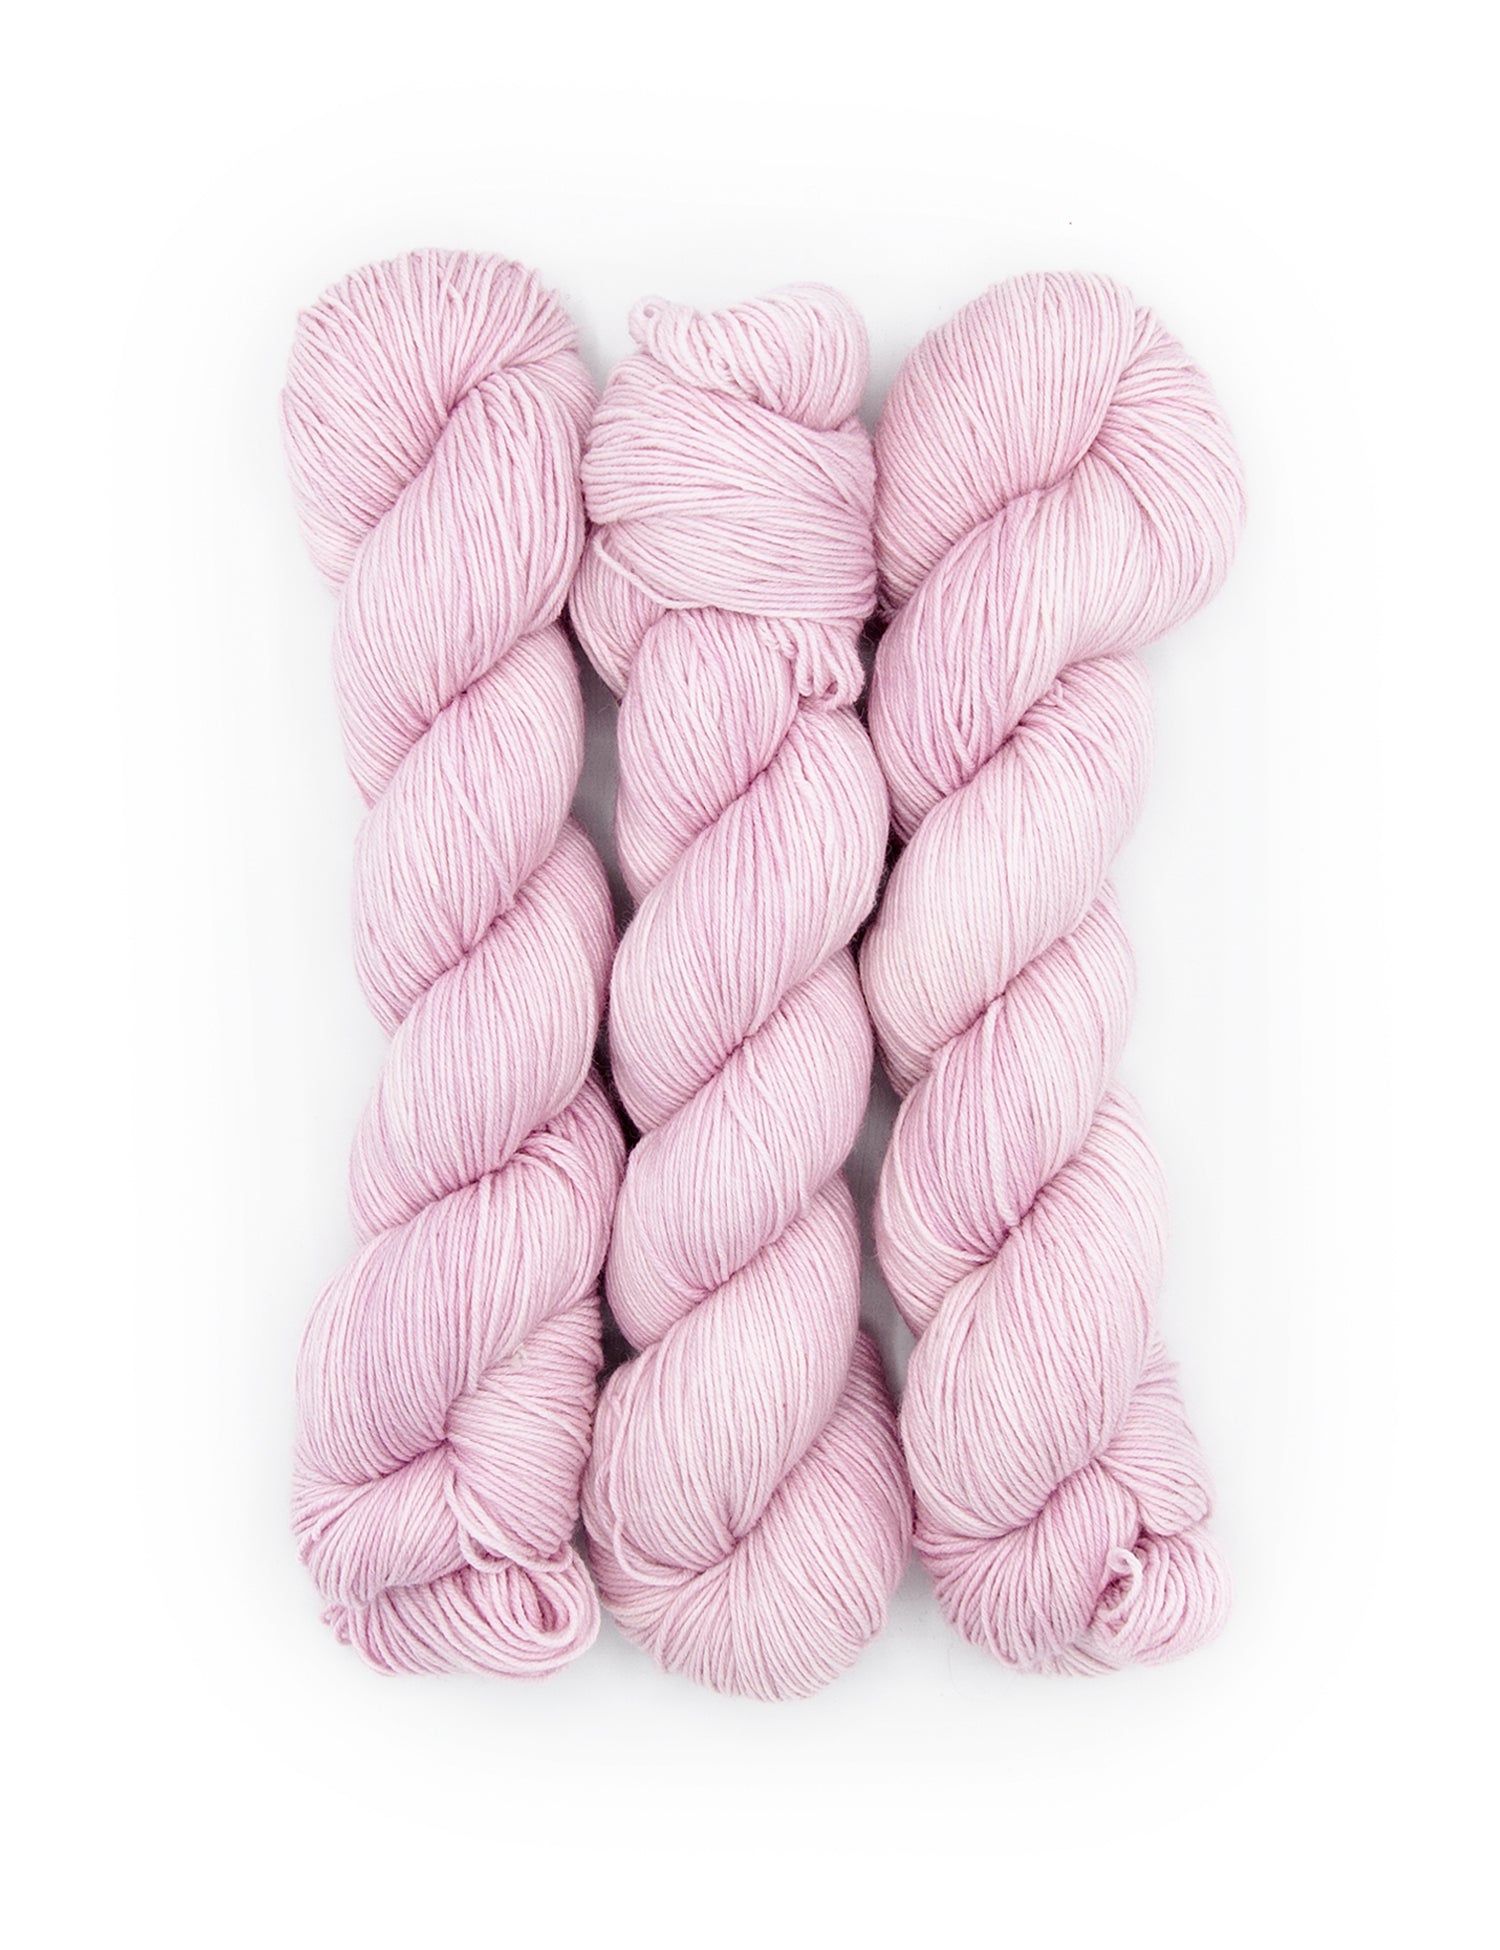 Organic Cotton & Natural Fiber Dyed Pink & Pomo Yellow Combo